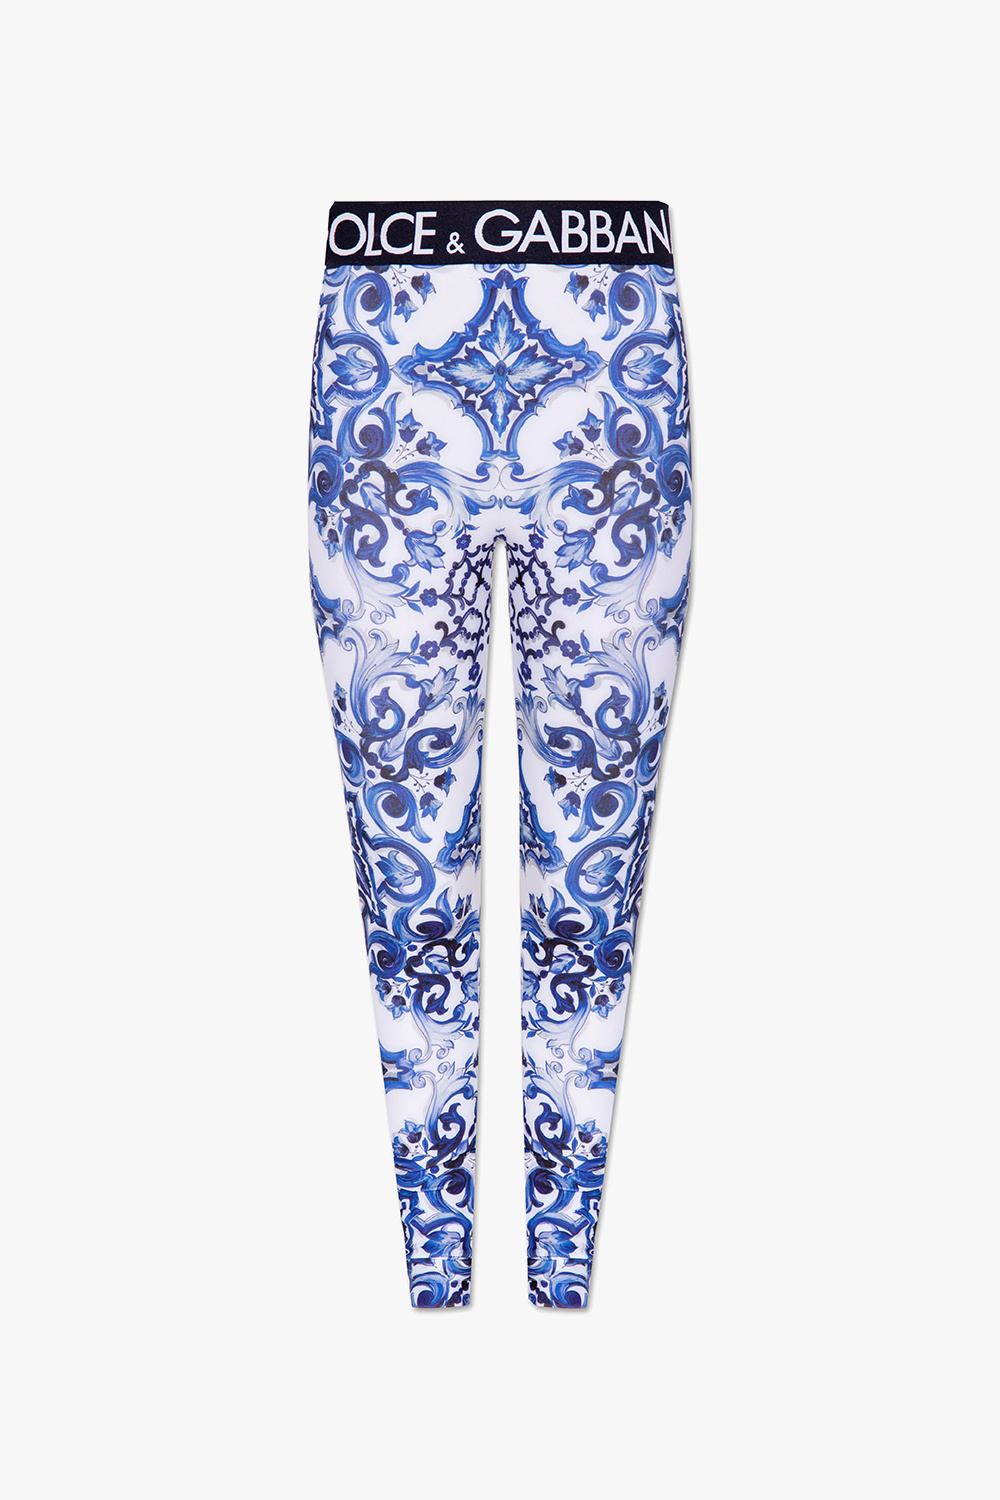 Women's Clothing, Dolce & Gabbana Patterned leggings, StclaircomoShops